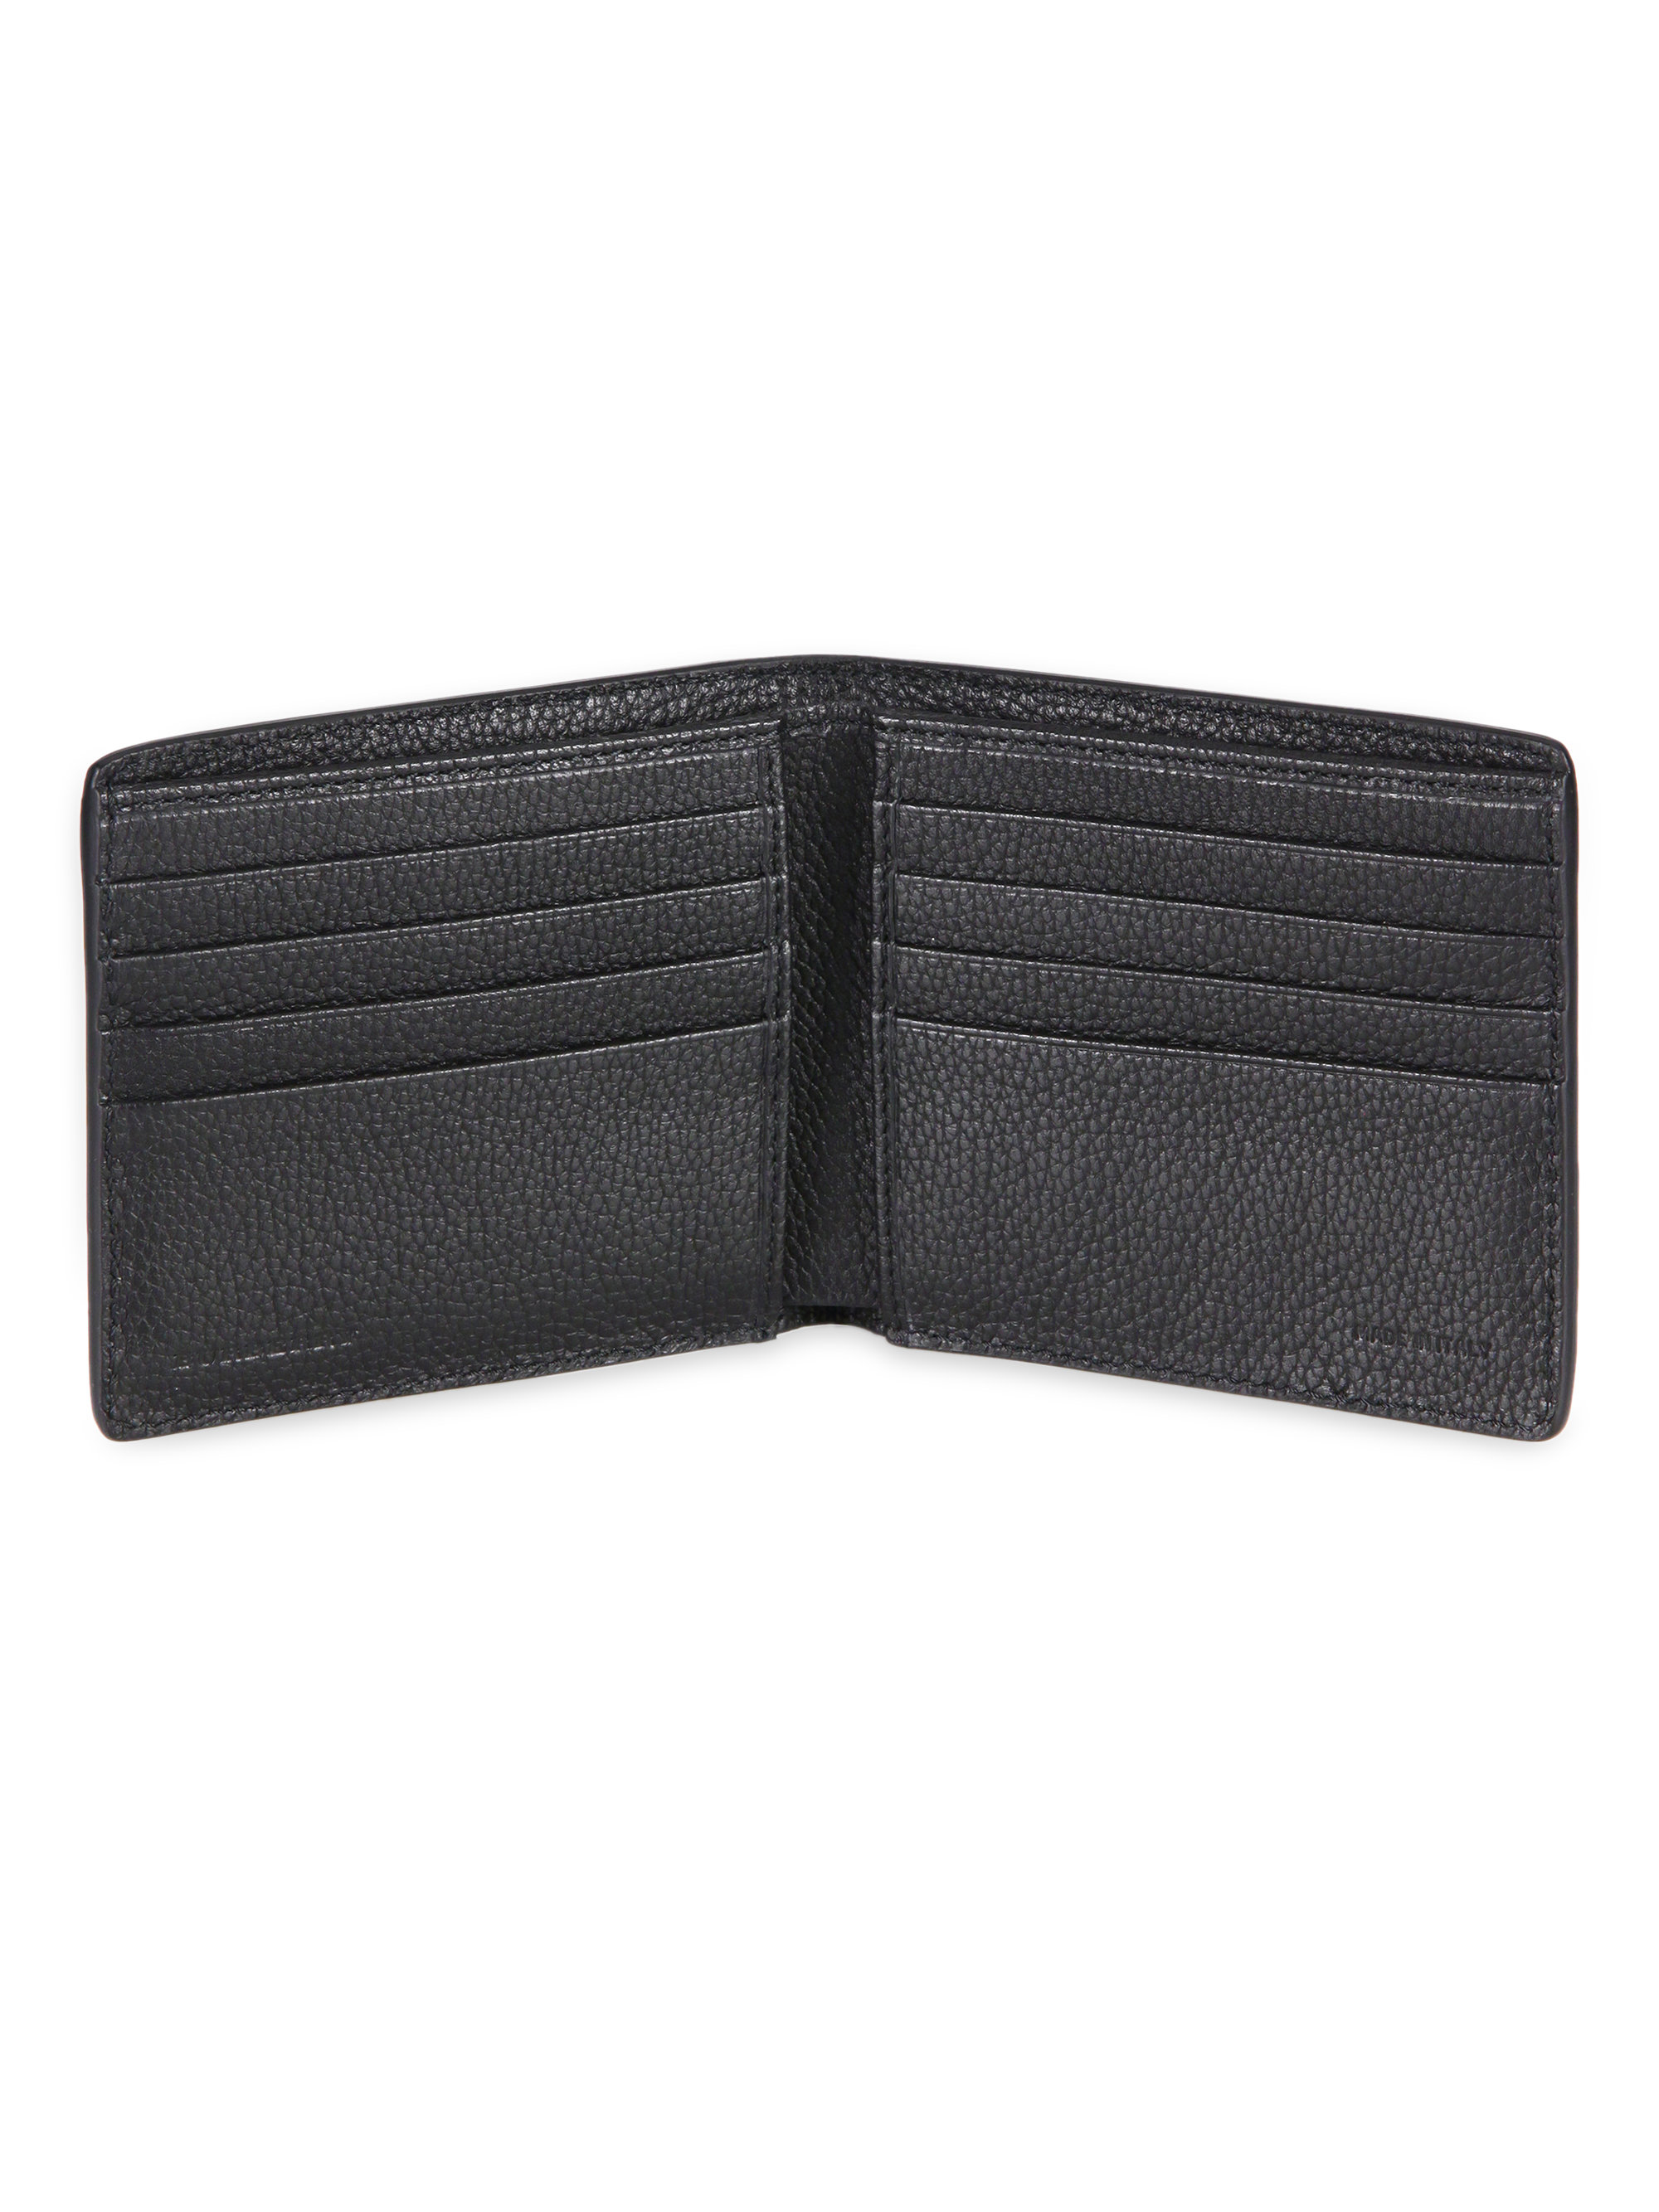 Burberry London Pebbled Leather Billfold Wallet in Black for Men | Lyst